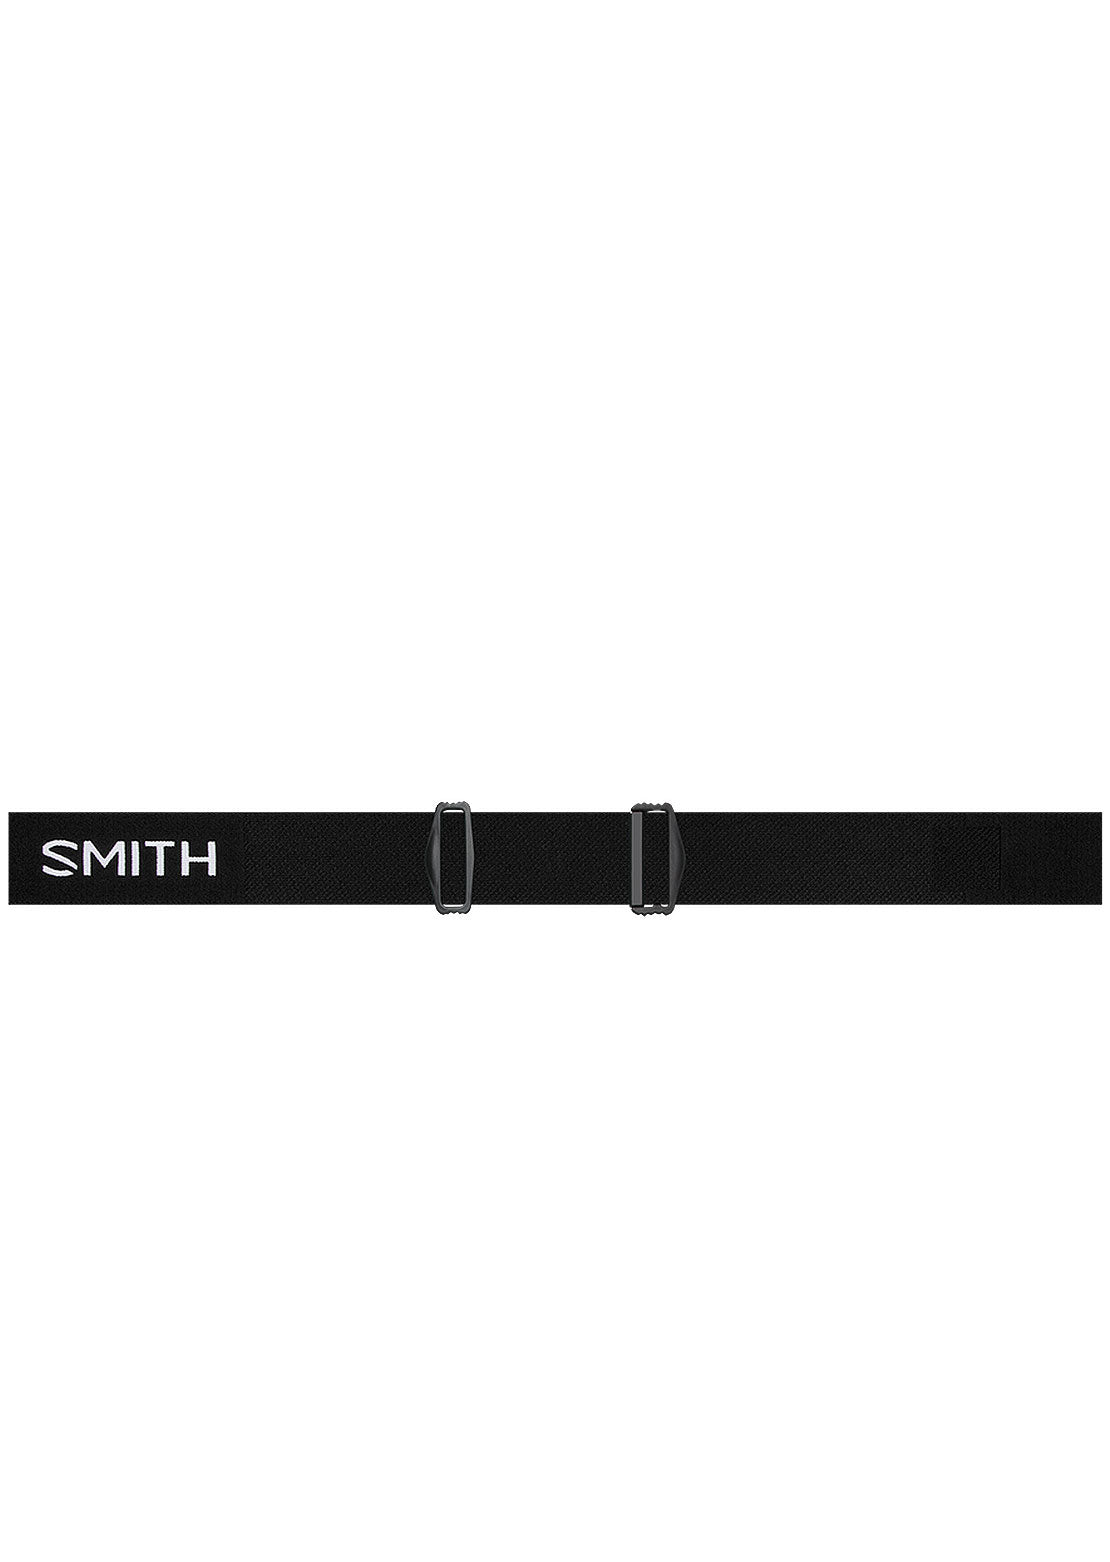 Smith Skyline XL Goggles Black/Chromapop Everyday Red Mirror